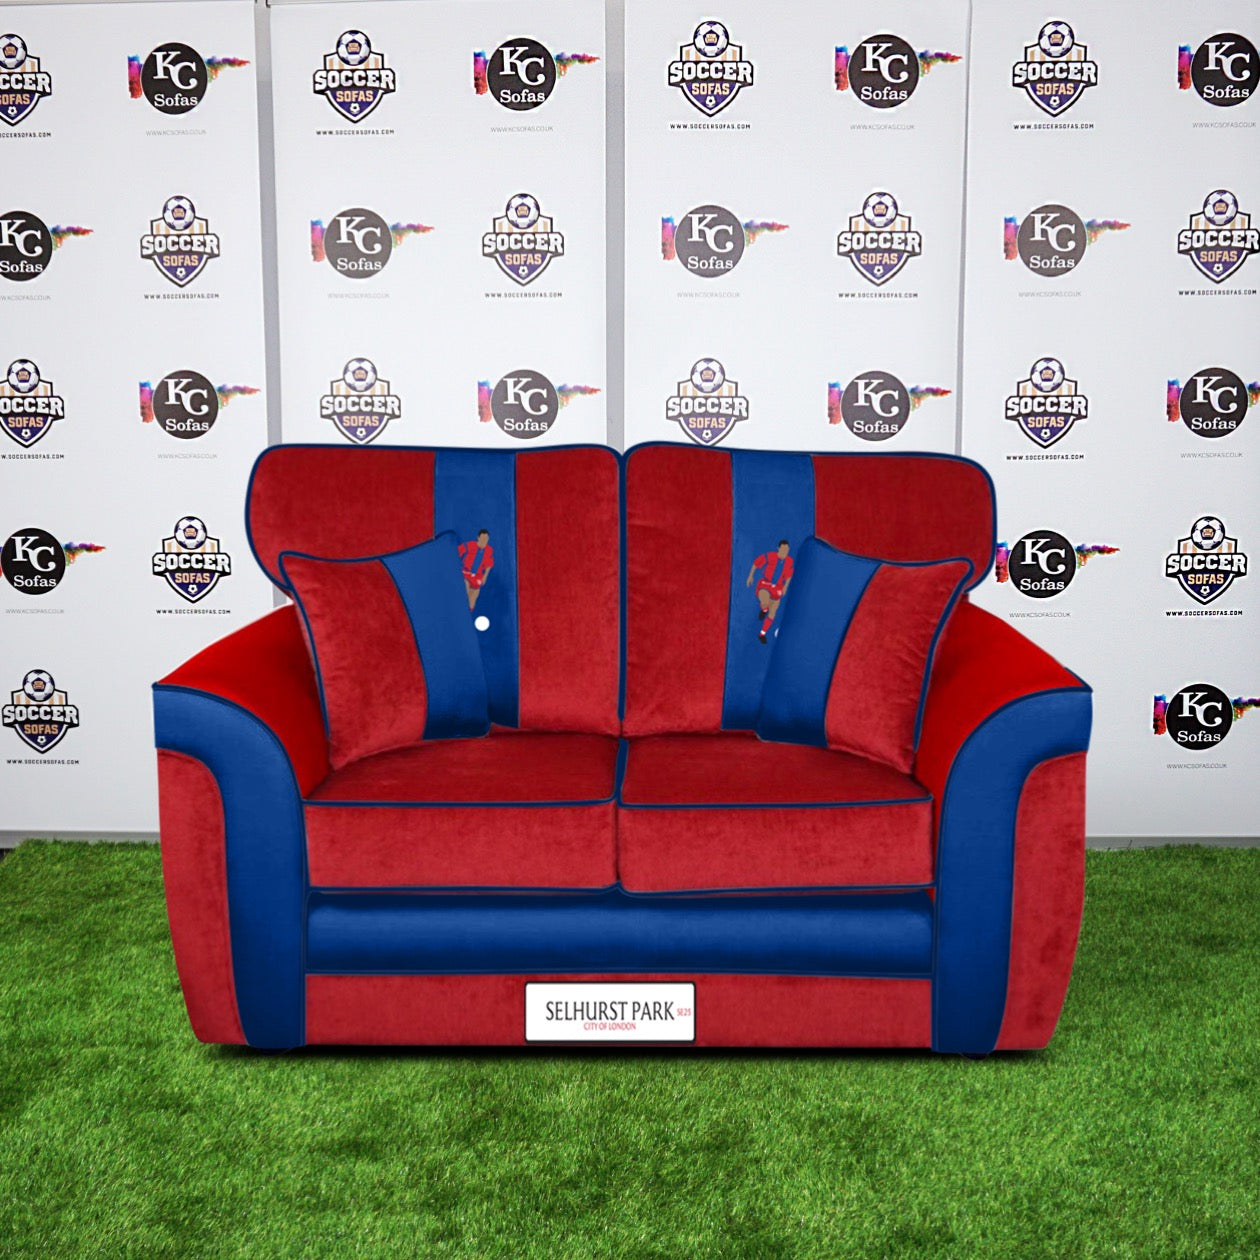 Selhurst Park 2 Seater Sofa (Crystal Palace FC)